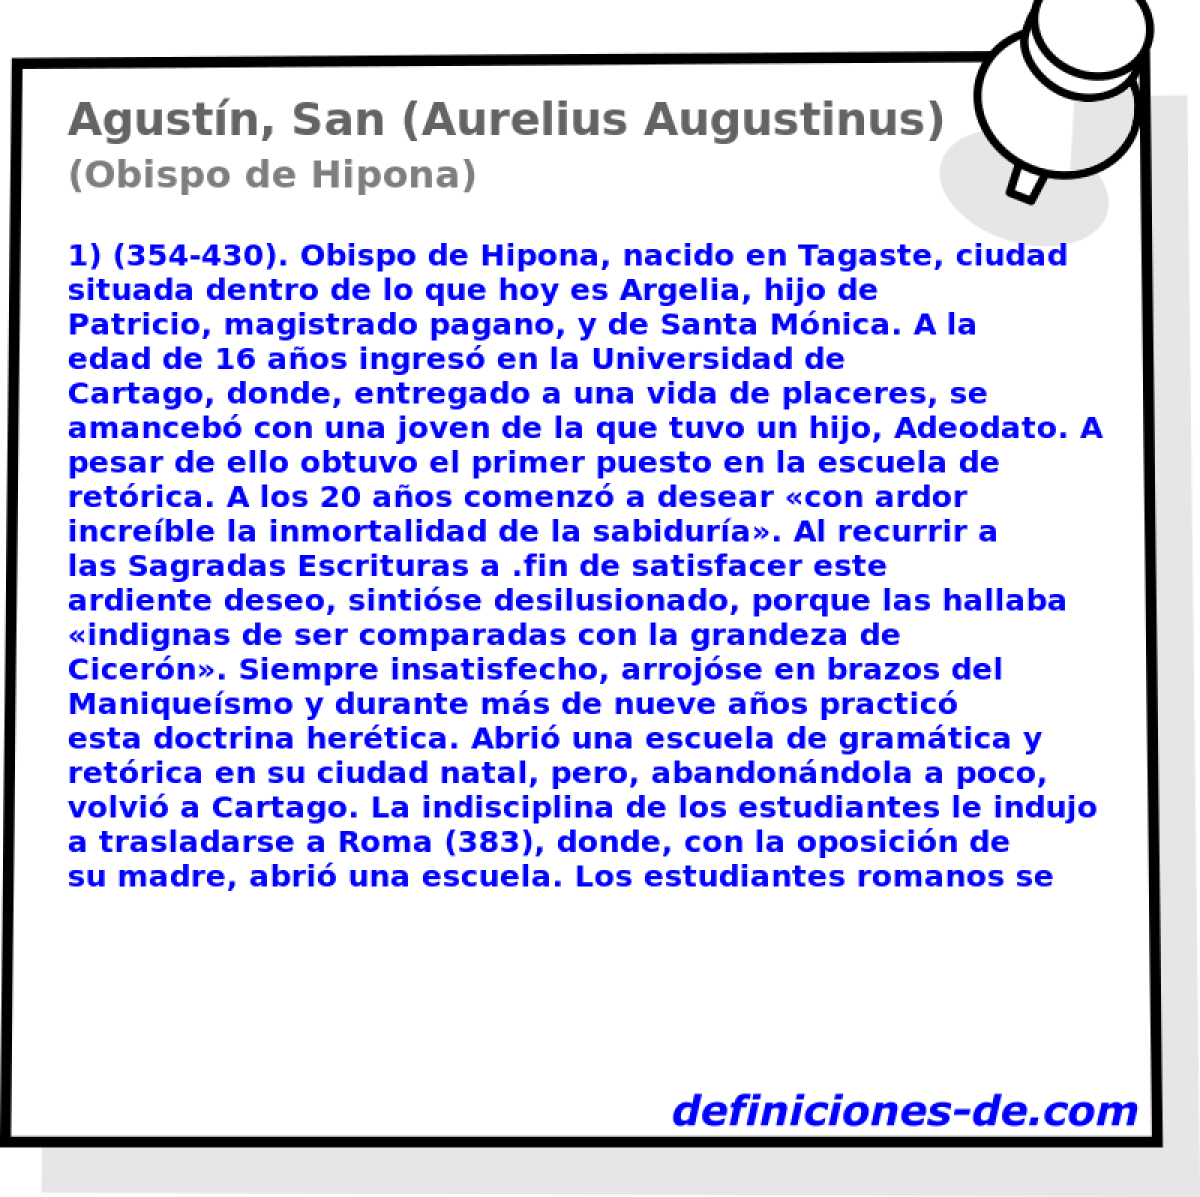 Agustn, San (Aurelius Augustinus) (Obispo de Hipona)